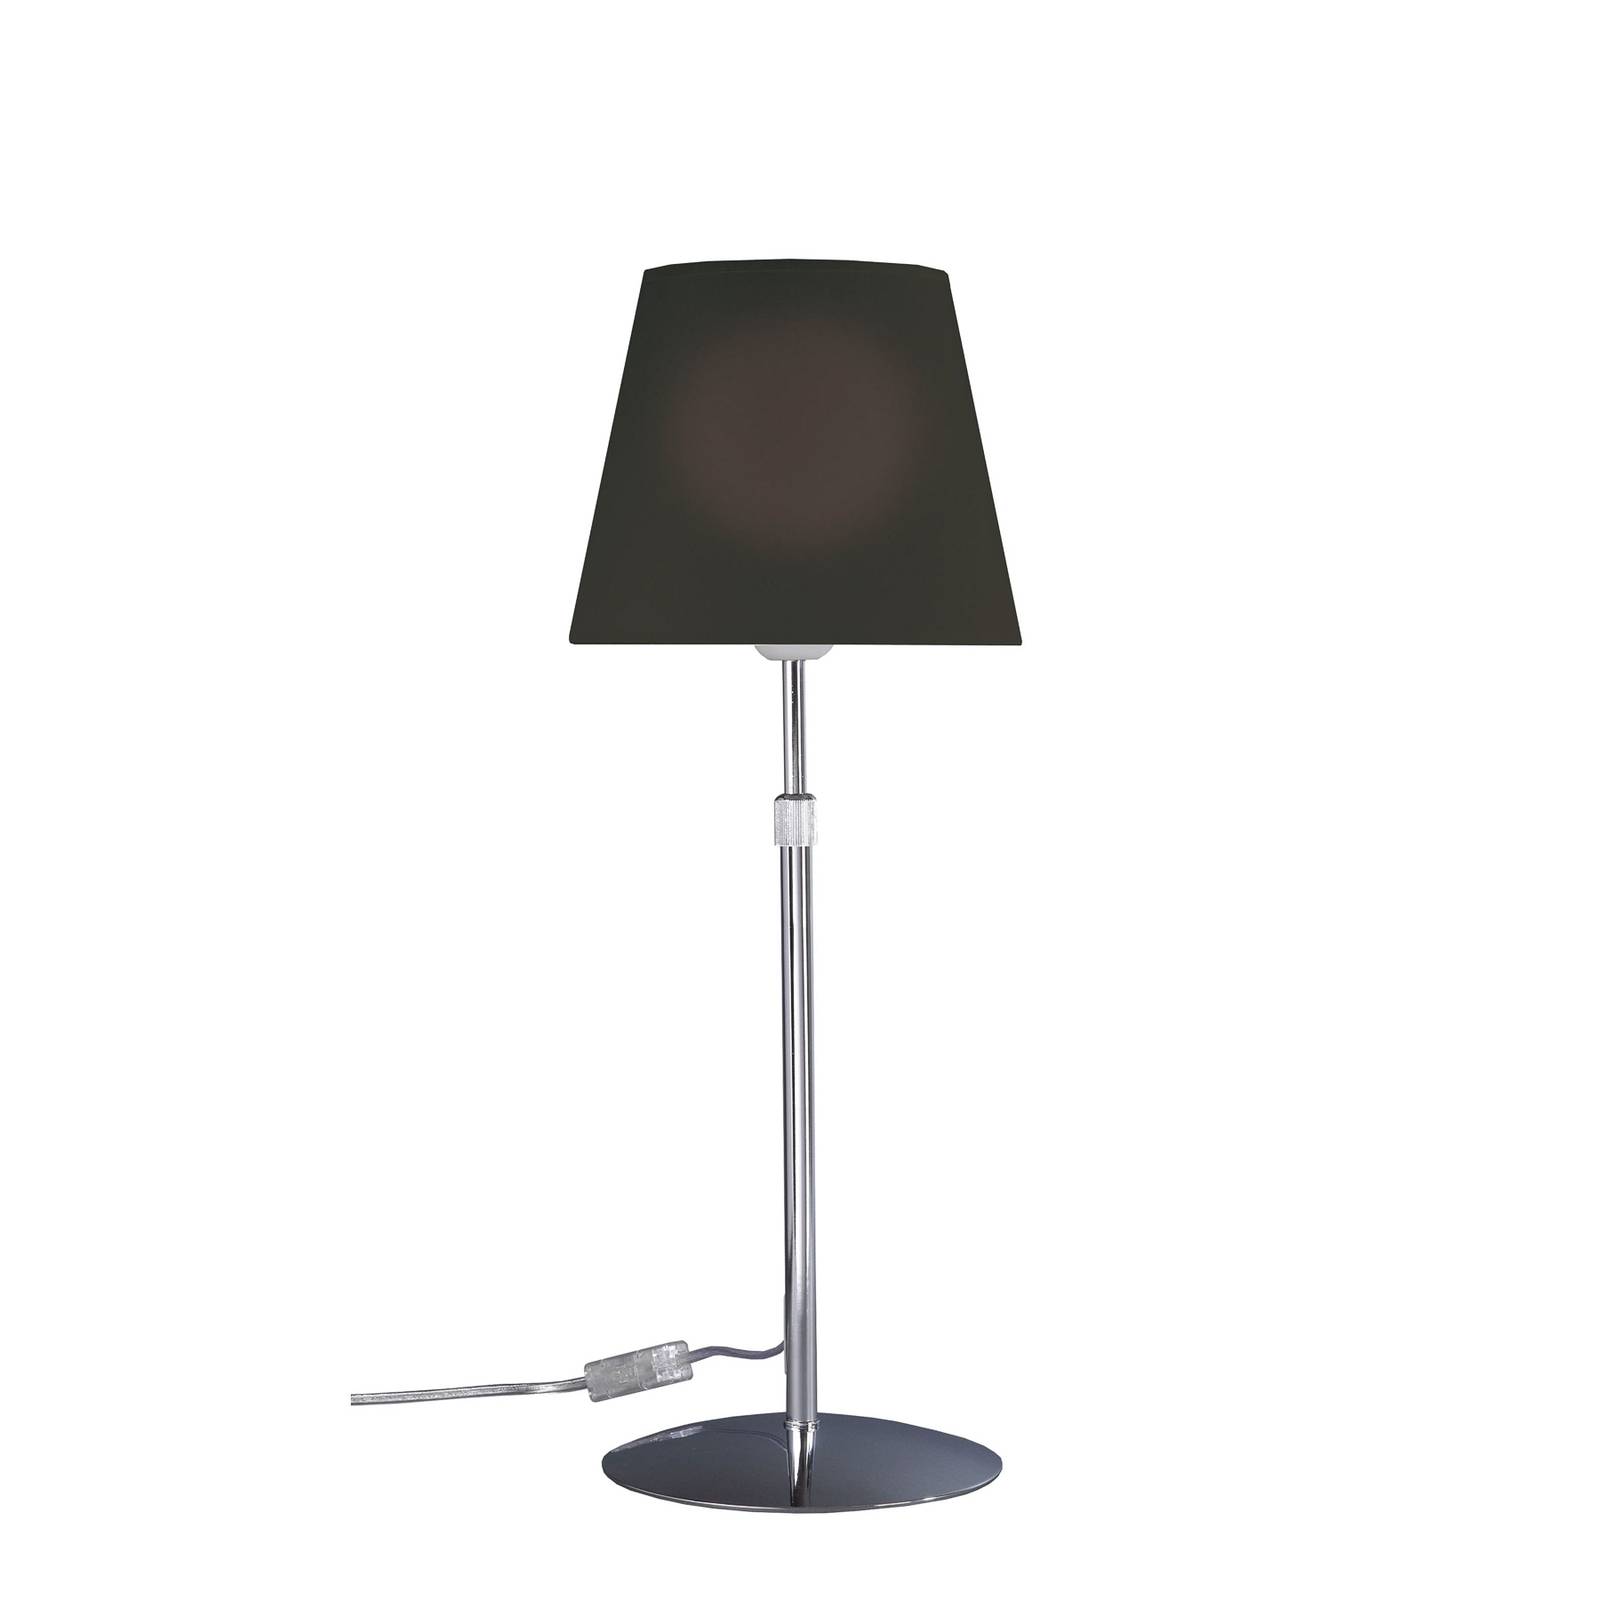 Aluminor Store asztali lámpa, króm/fekete